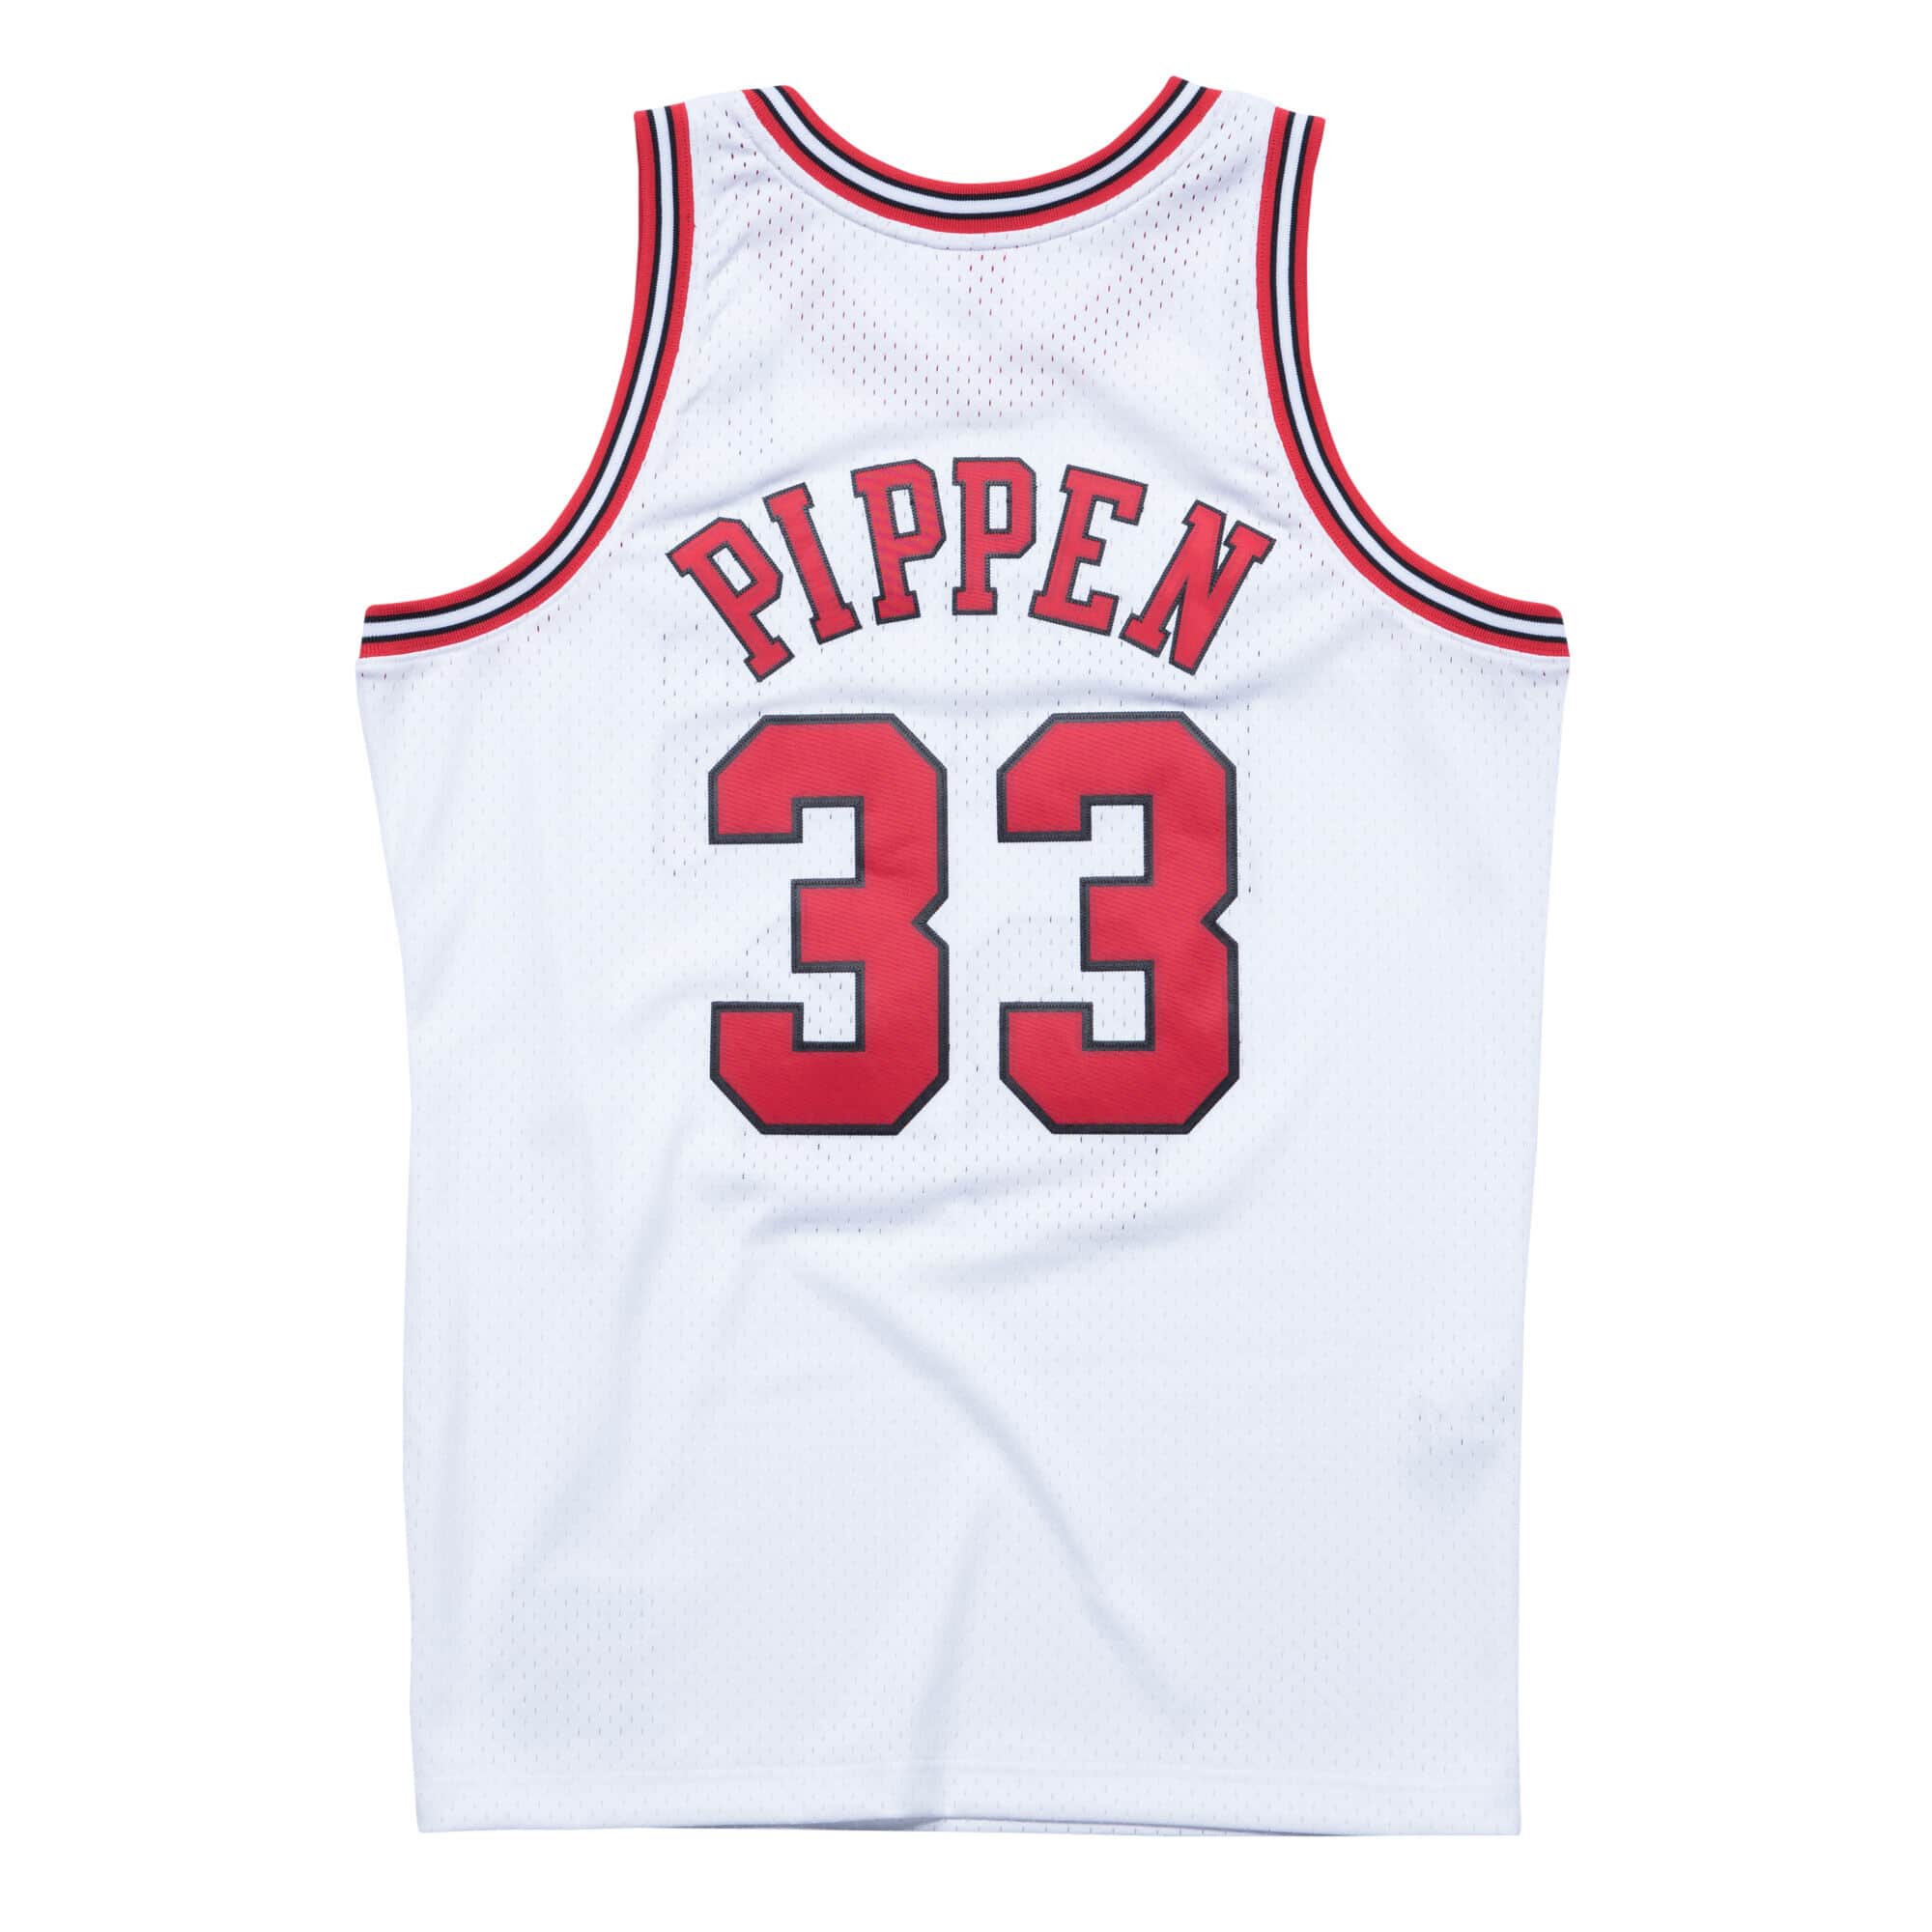 Scottie Pippen Jerseys, Scottie Pippen Shirts, Basketball Apparel